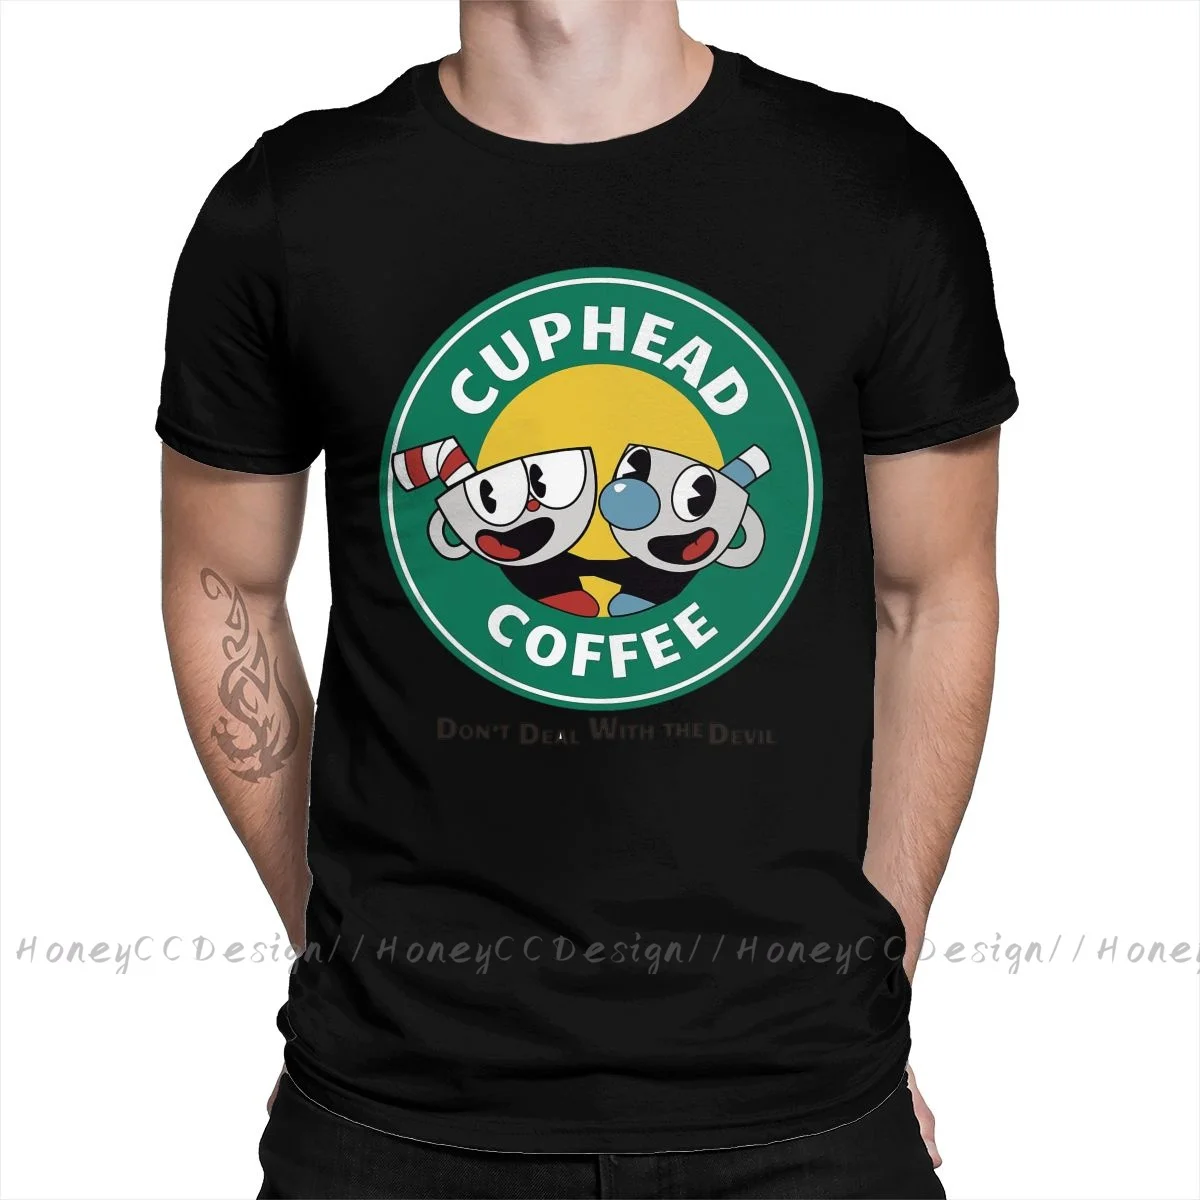 Cuphead Print Cotton T-Shirt Camiseta Hombre CupHead Mug For Men Fashion Streetwear Shirt Gift